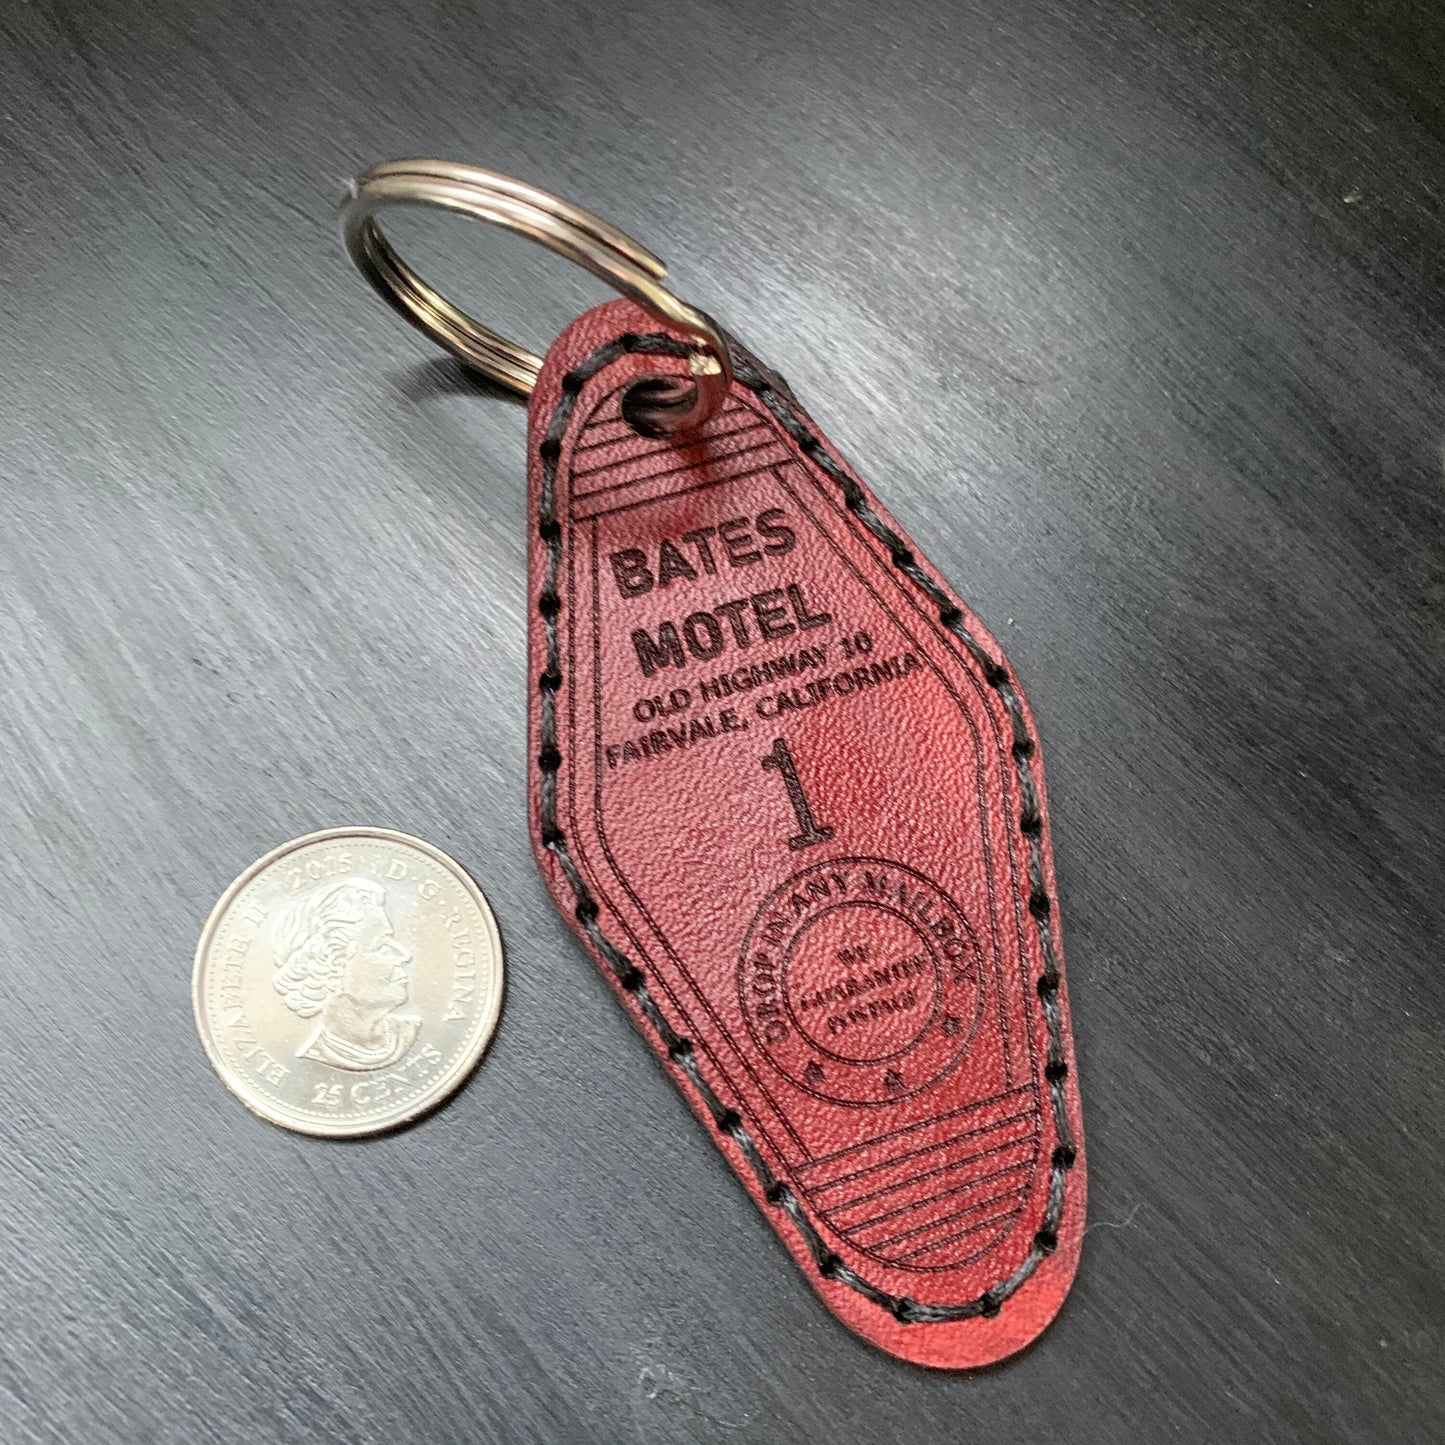 Bates Motel Leather Retro Key Chain